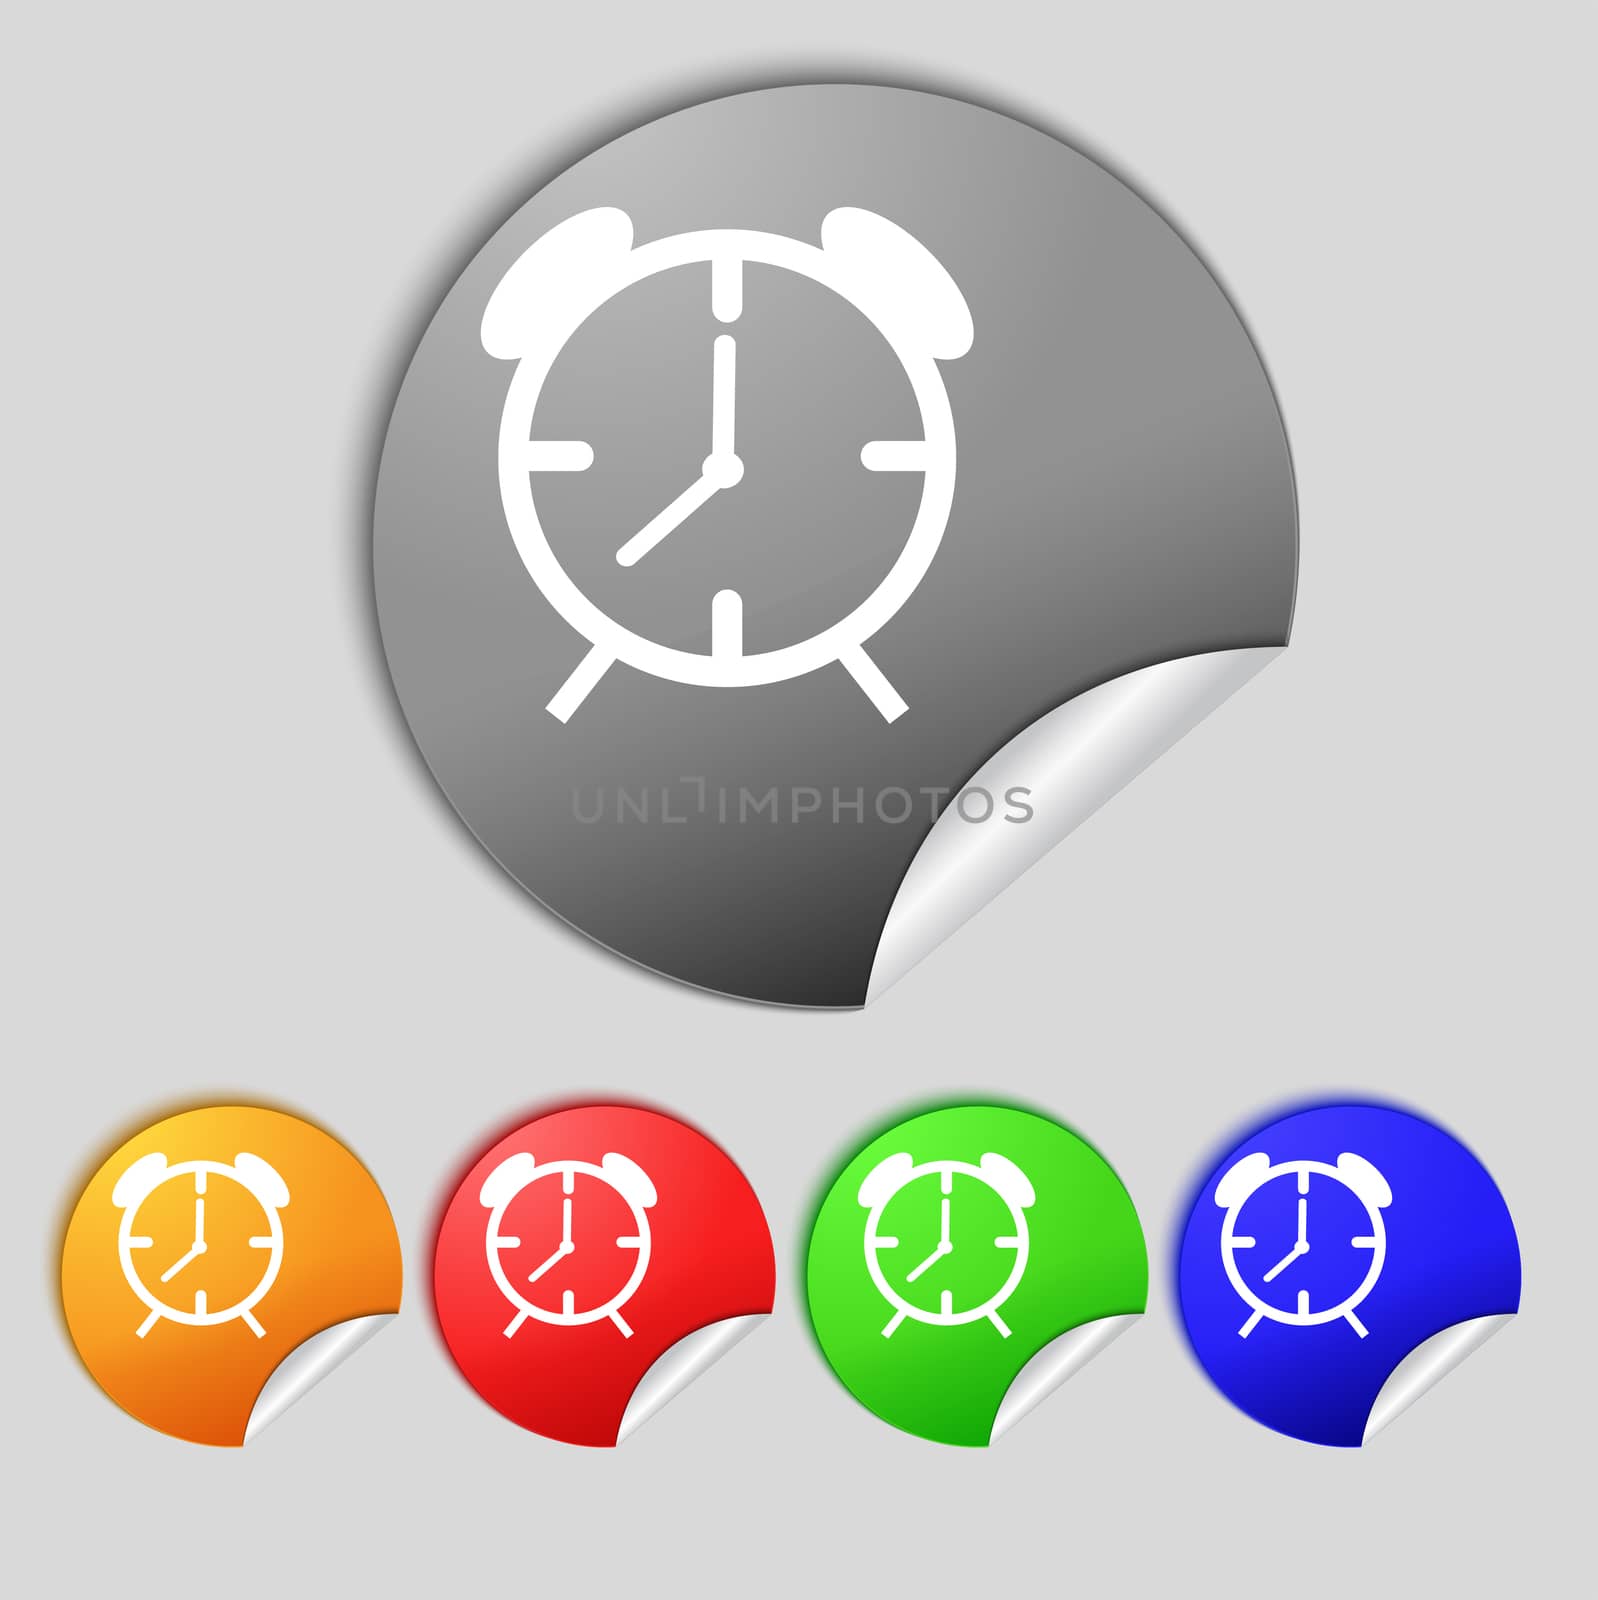 Alarm clock sign icon. Wake up alarm symbol. Set of colourful buttons. illustration